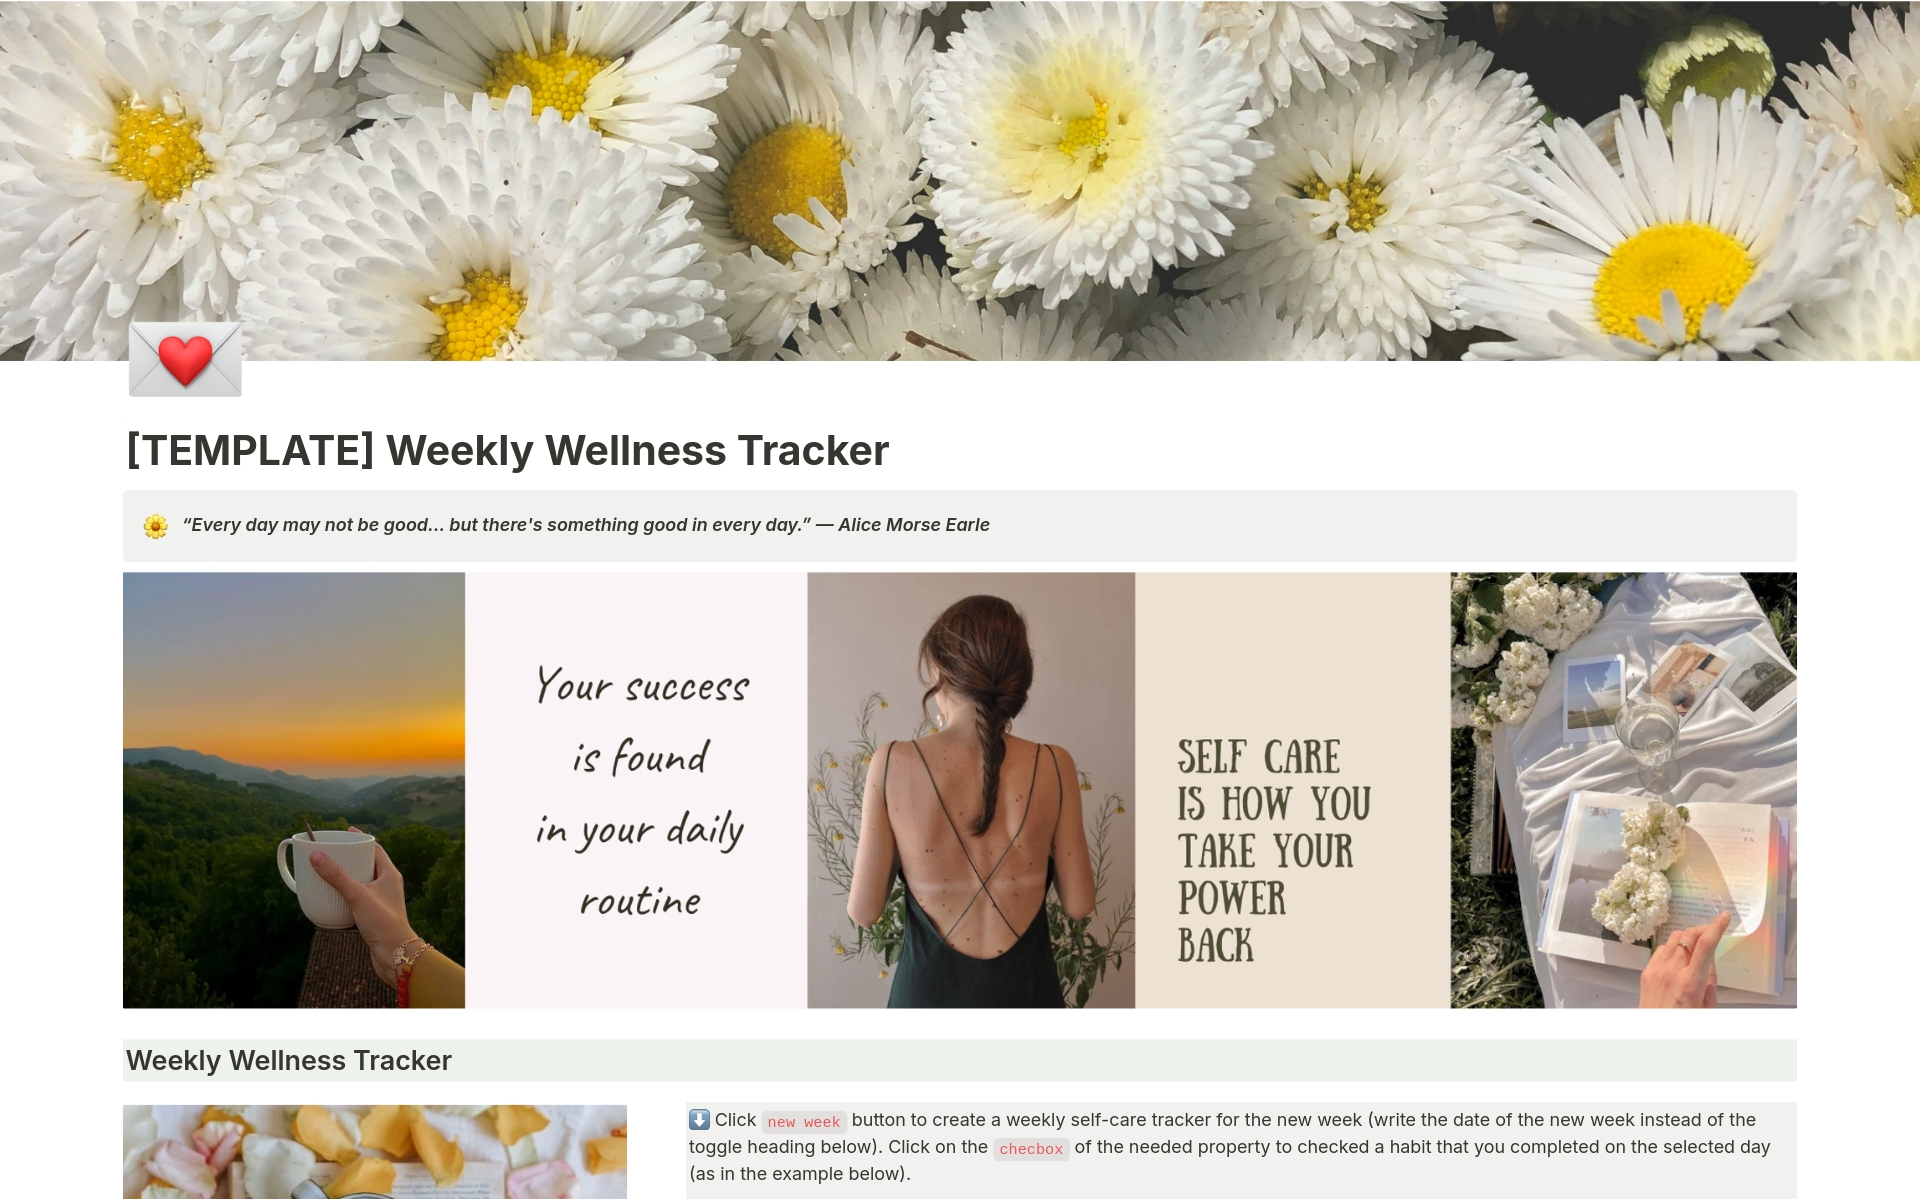 Aperçu du modèle de Weekly Wellness Tracker